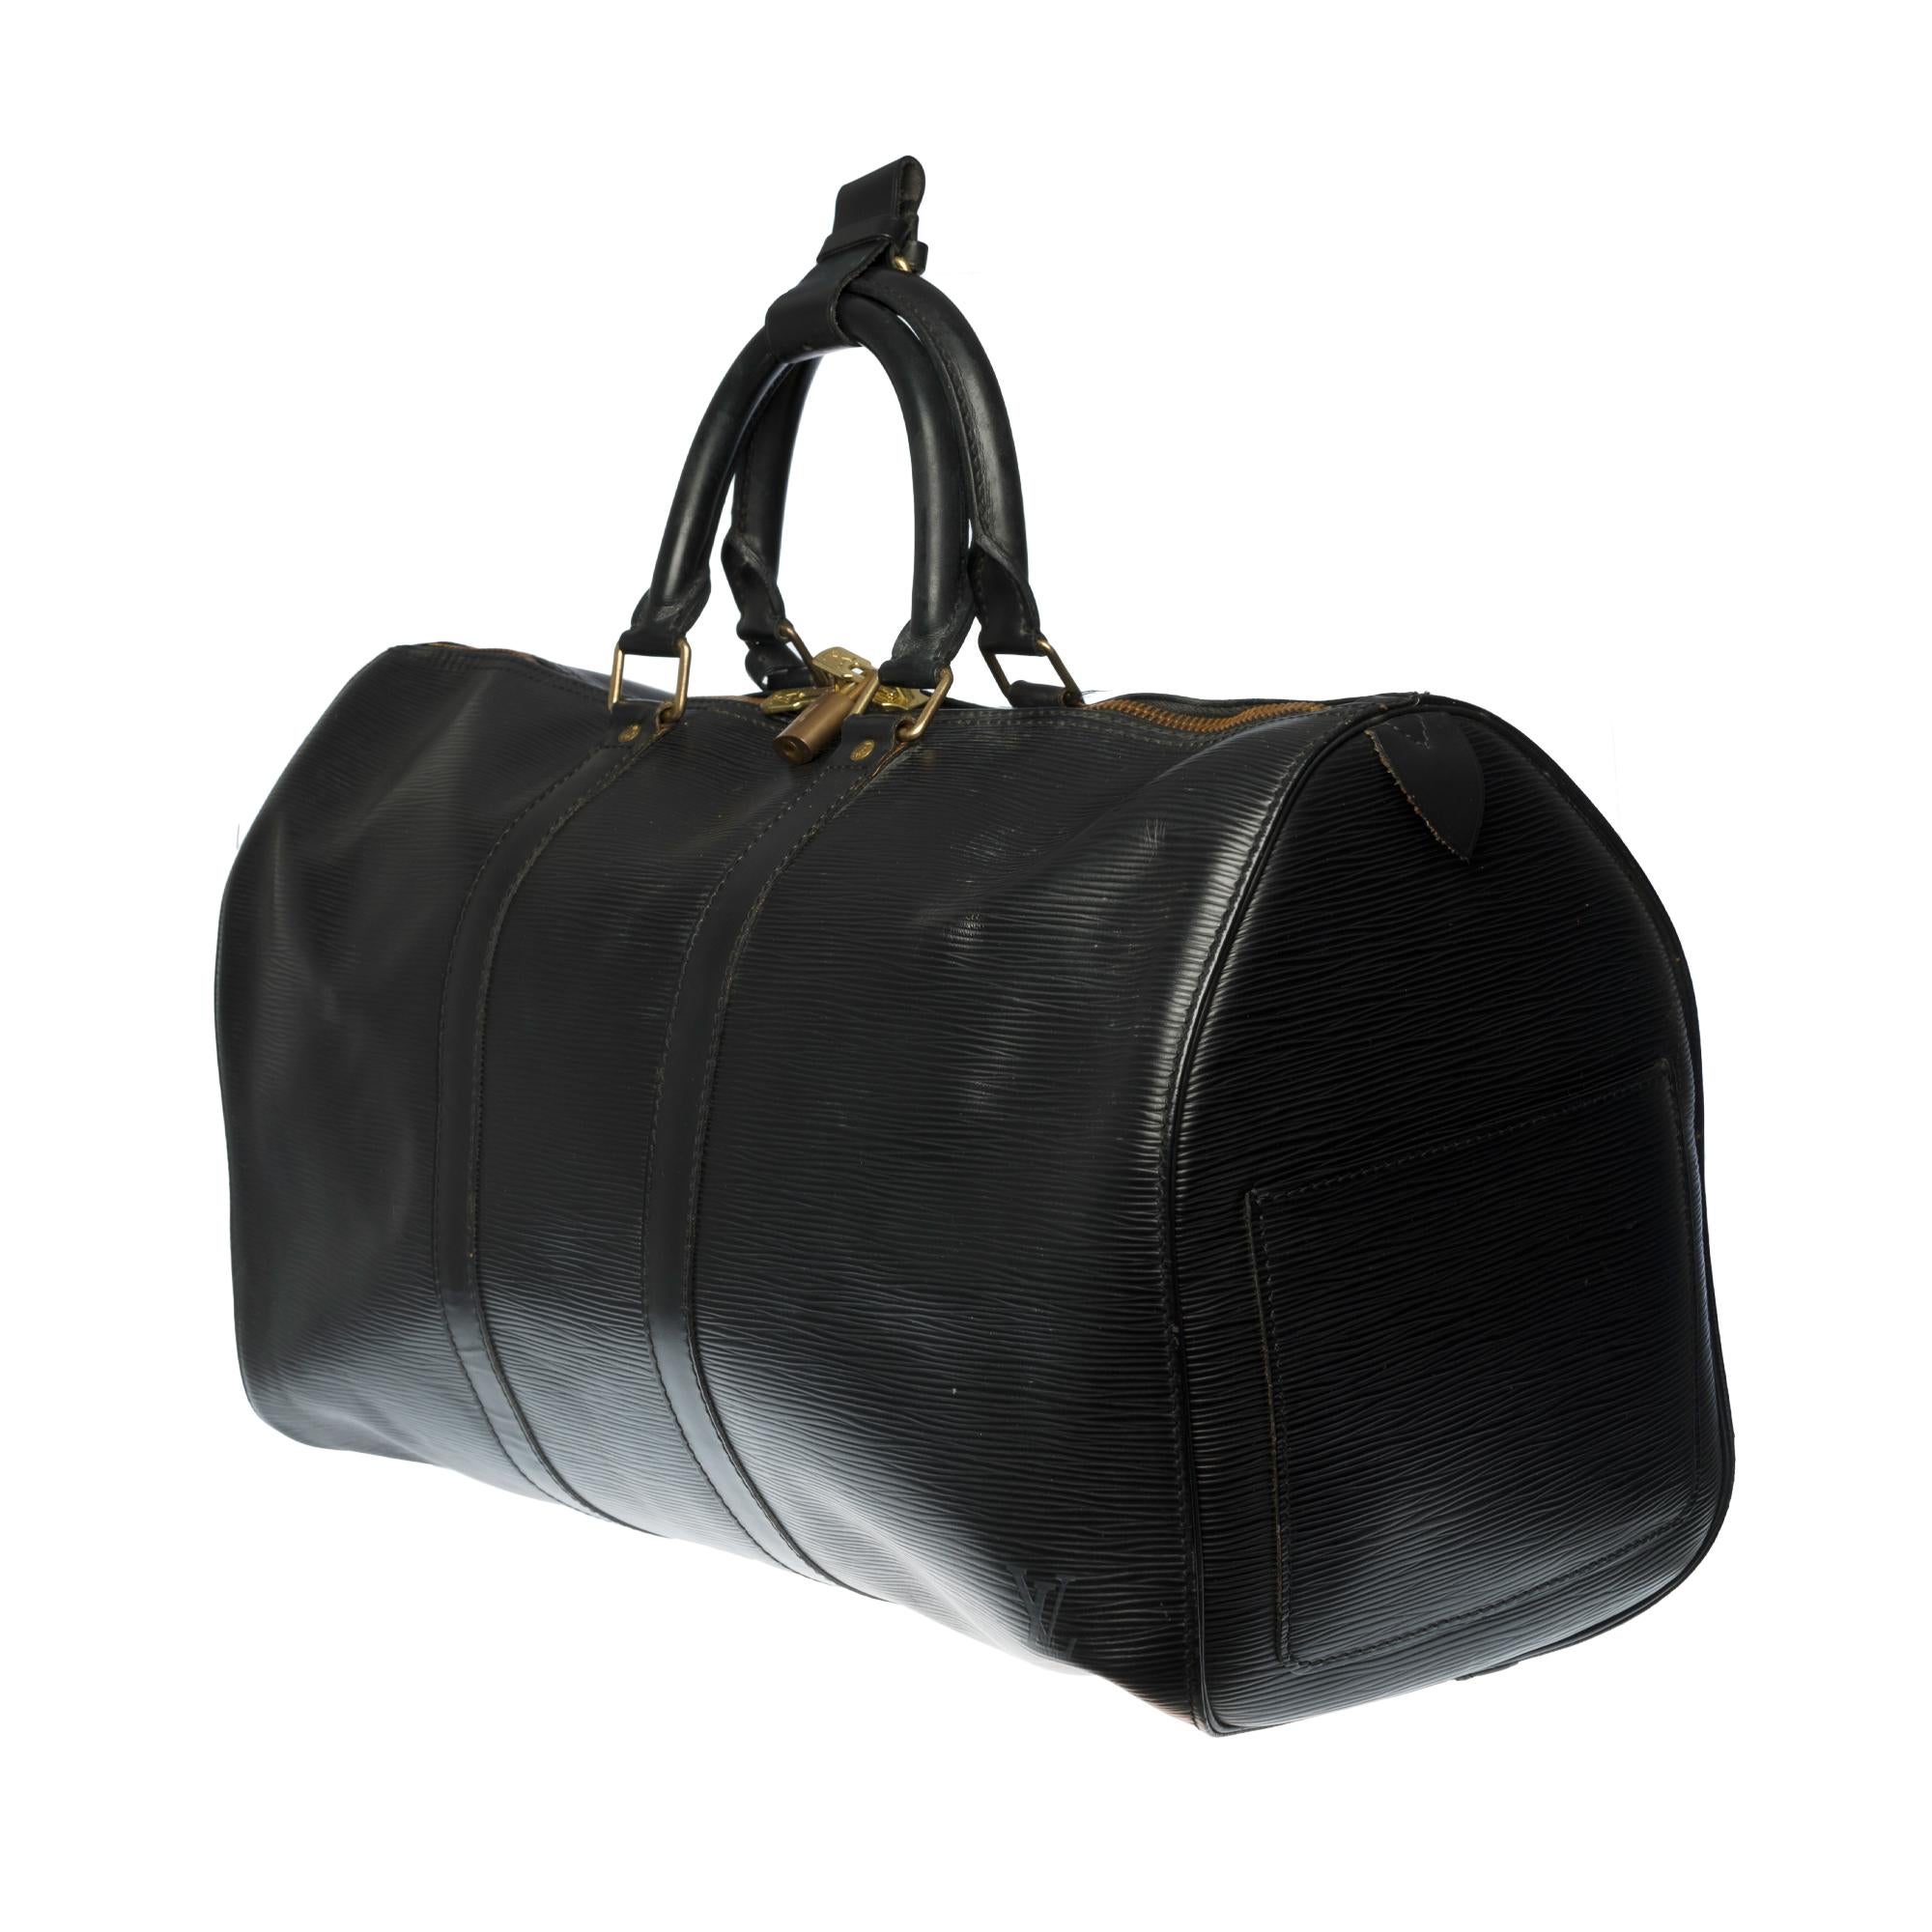 Black Louis Vuitton Keepall 45 Travel bag in black épi leather